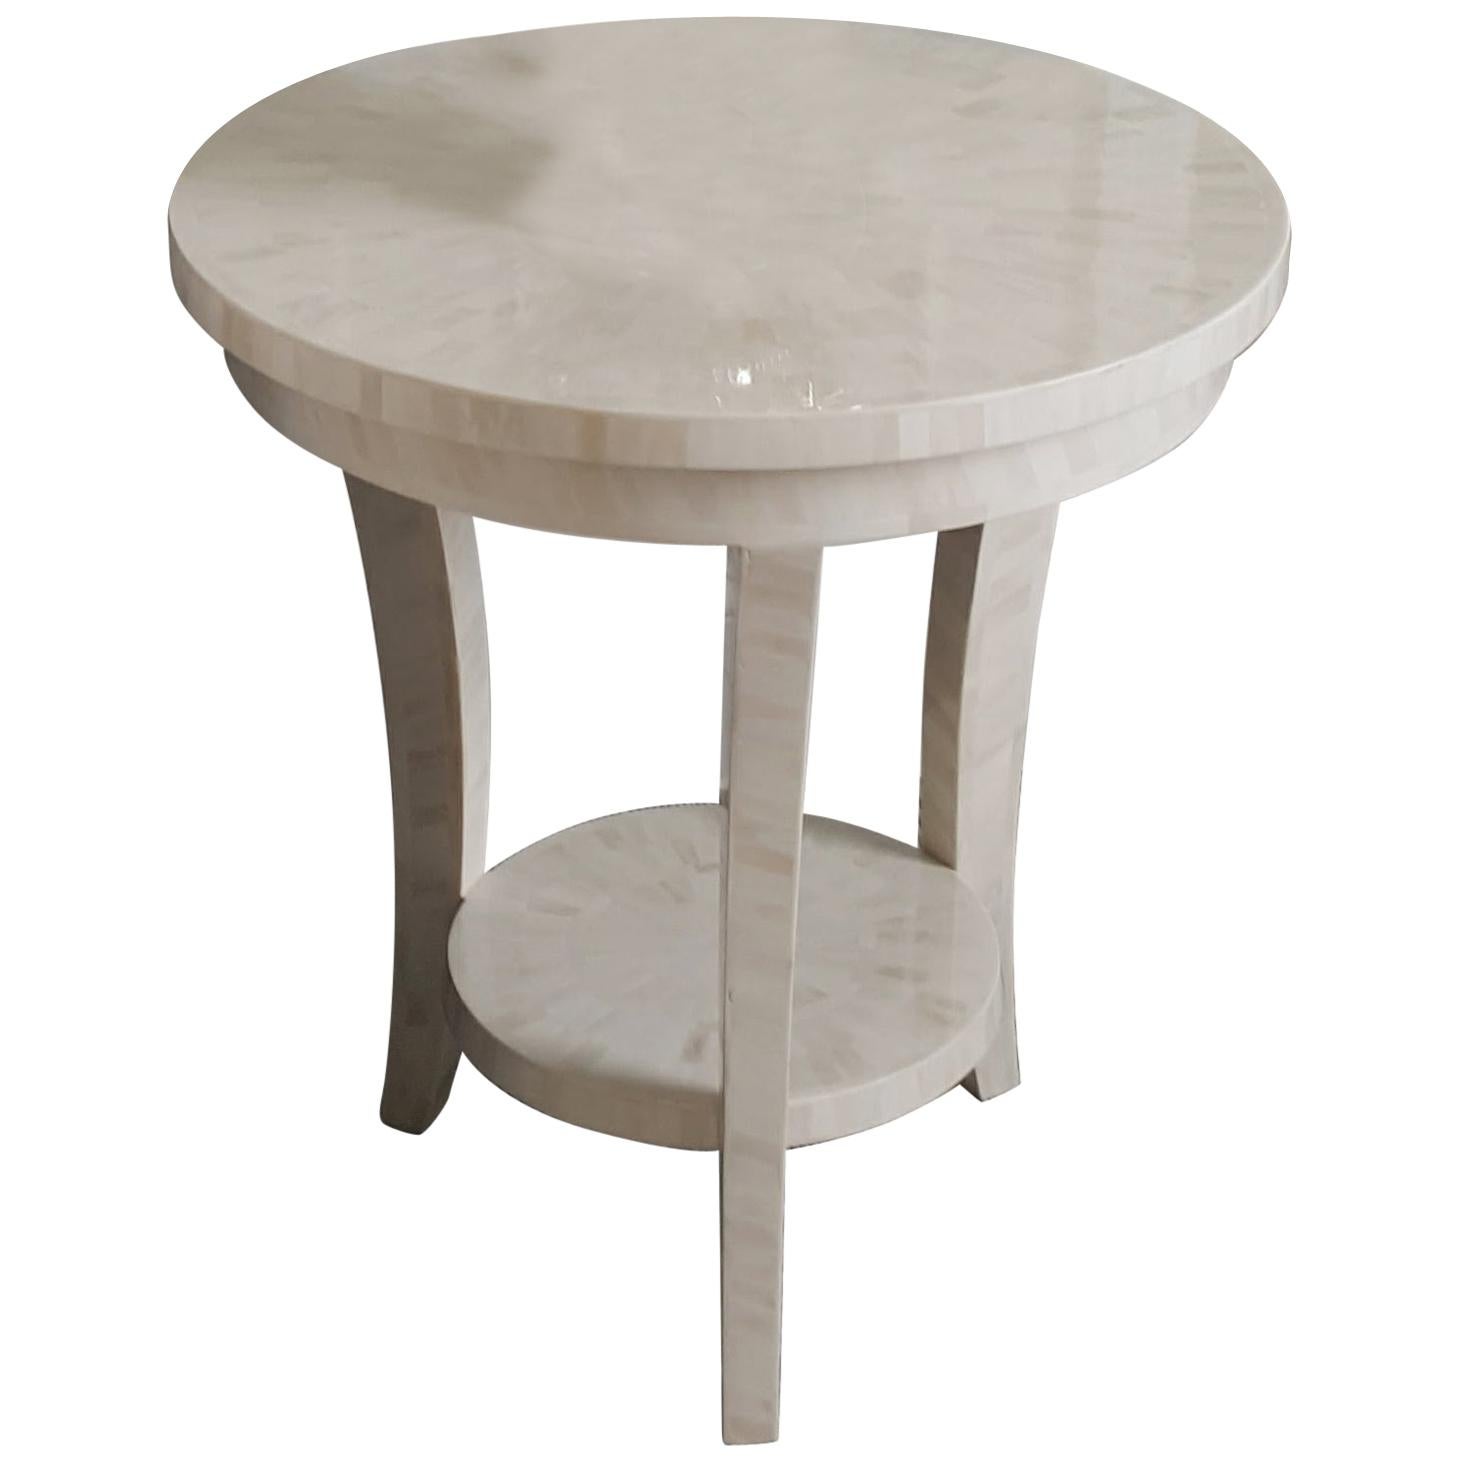 Karakum Two-Tiered Table in Bone with Shelf